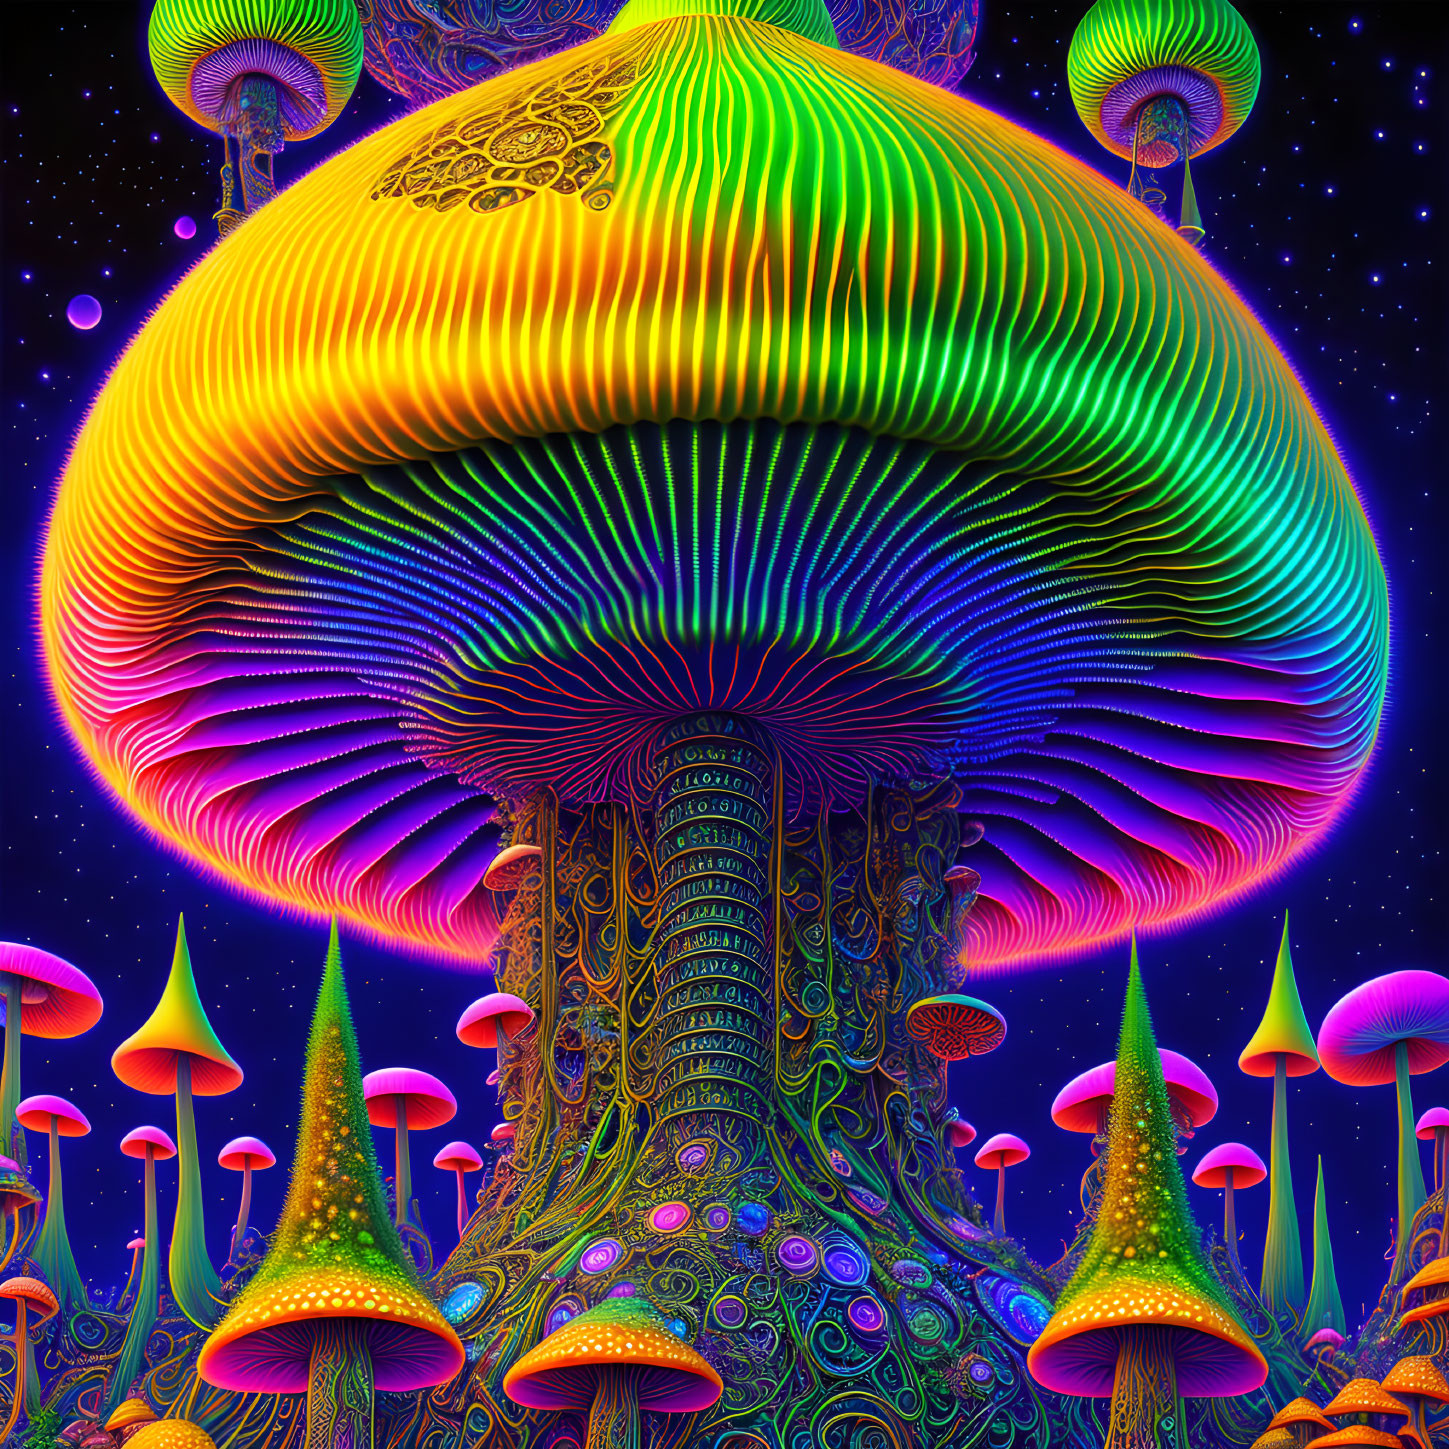 The mother mushroom